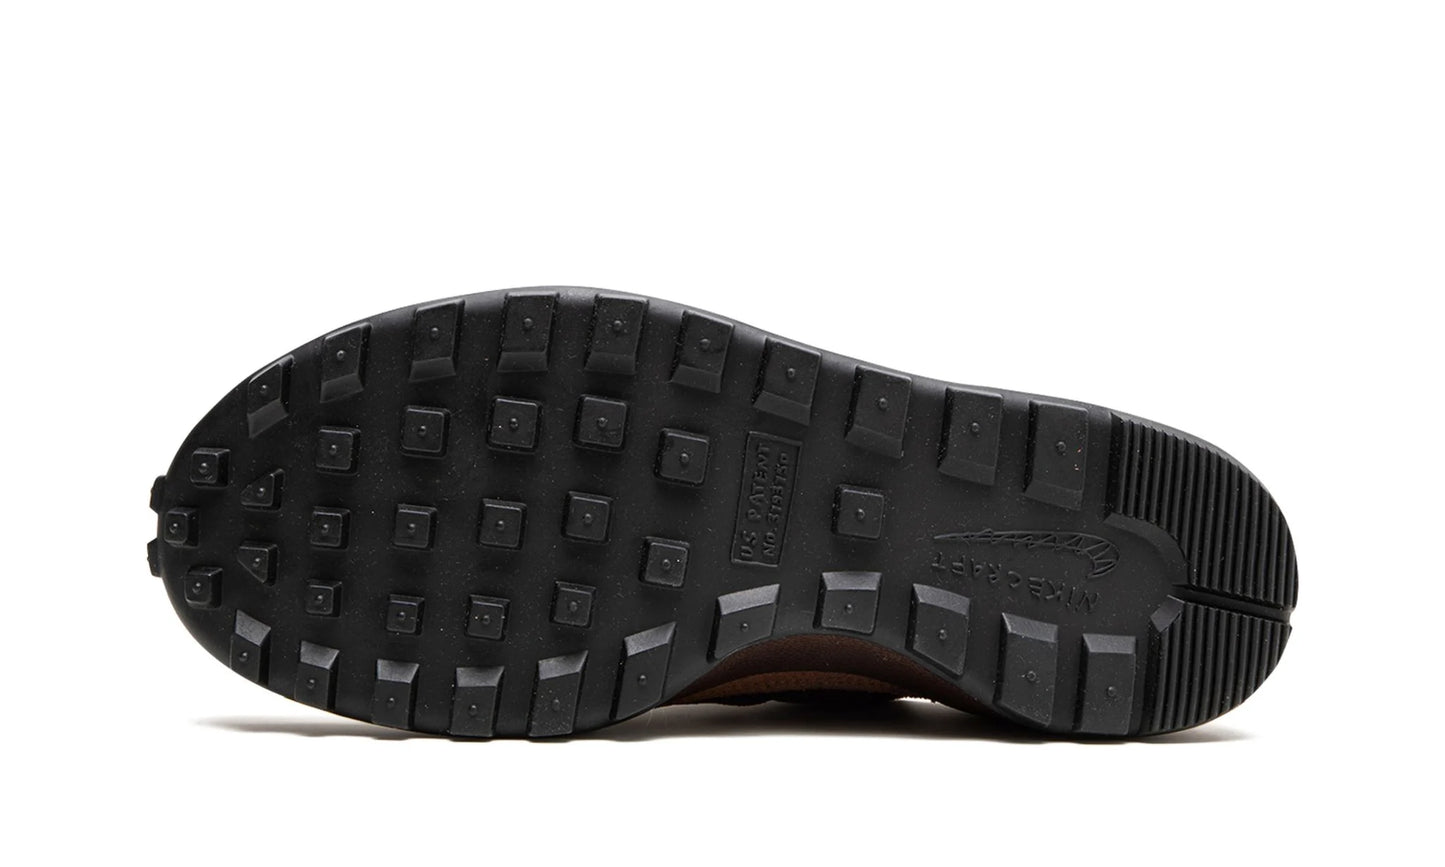 General Purpose Shoe 'Tom Sachs x NikeCraft' - Field Brown